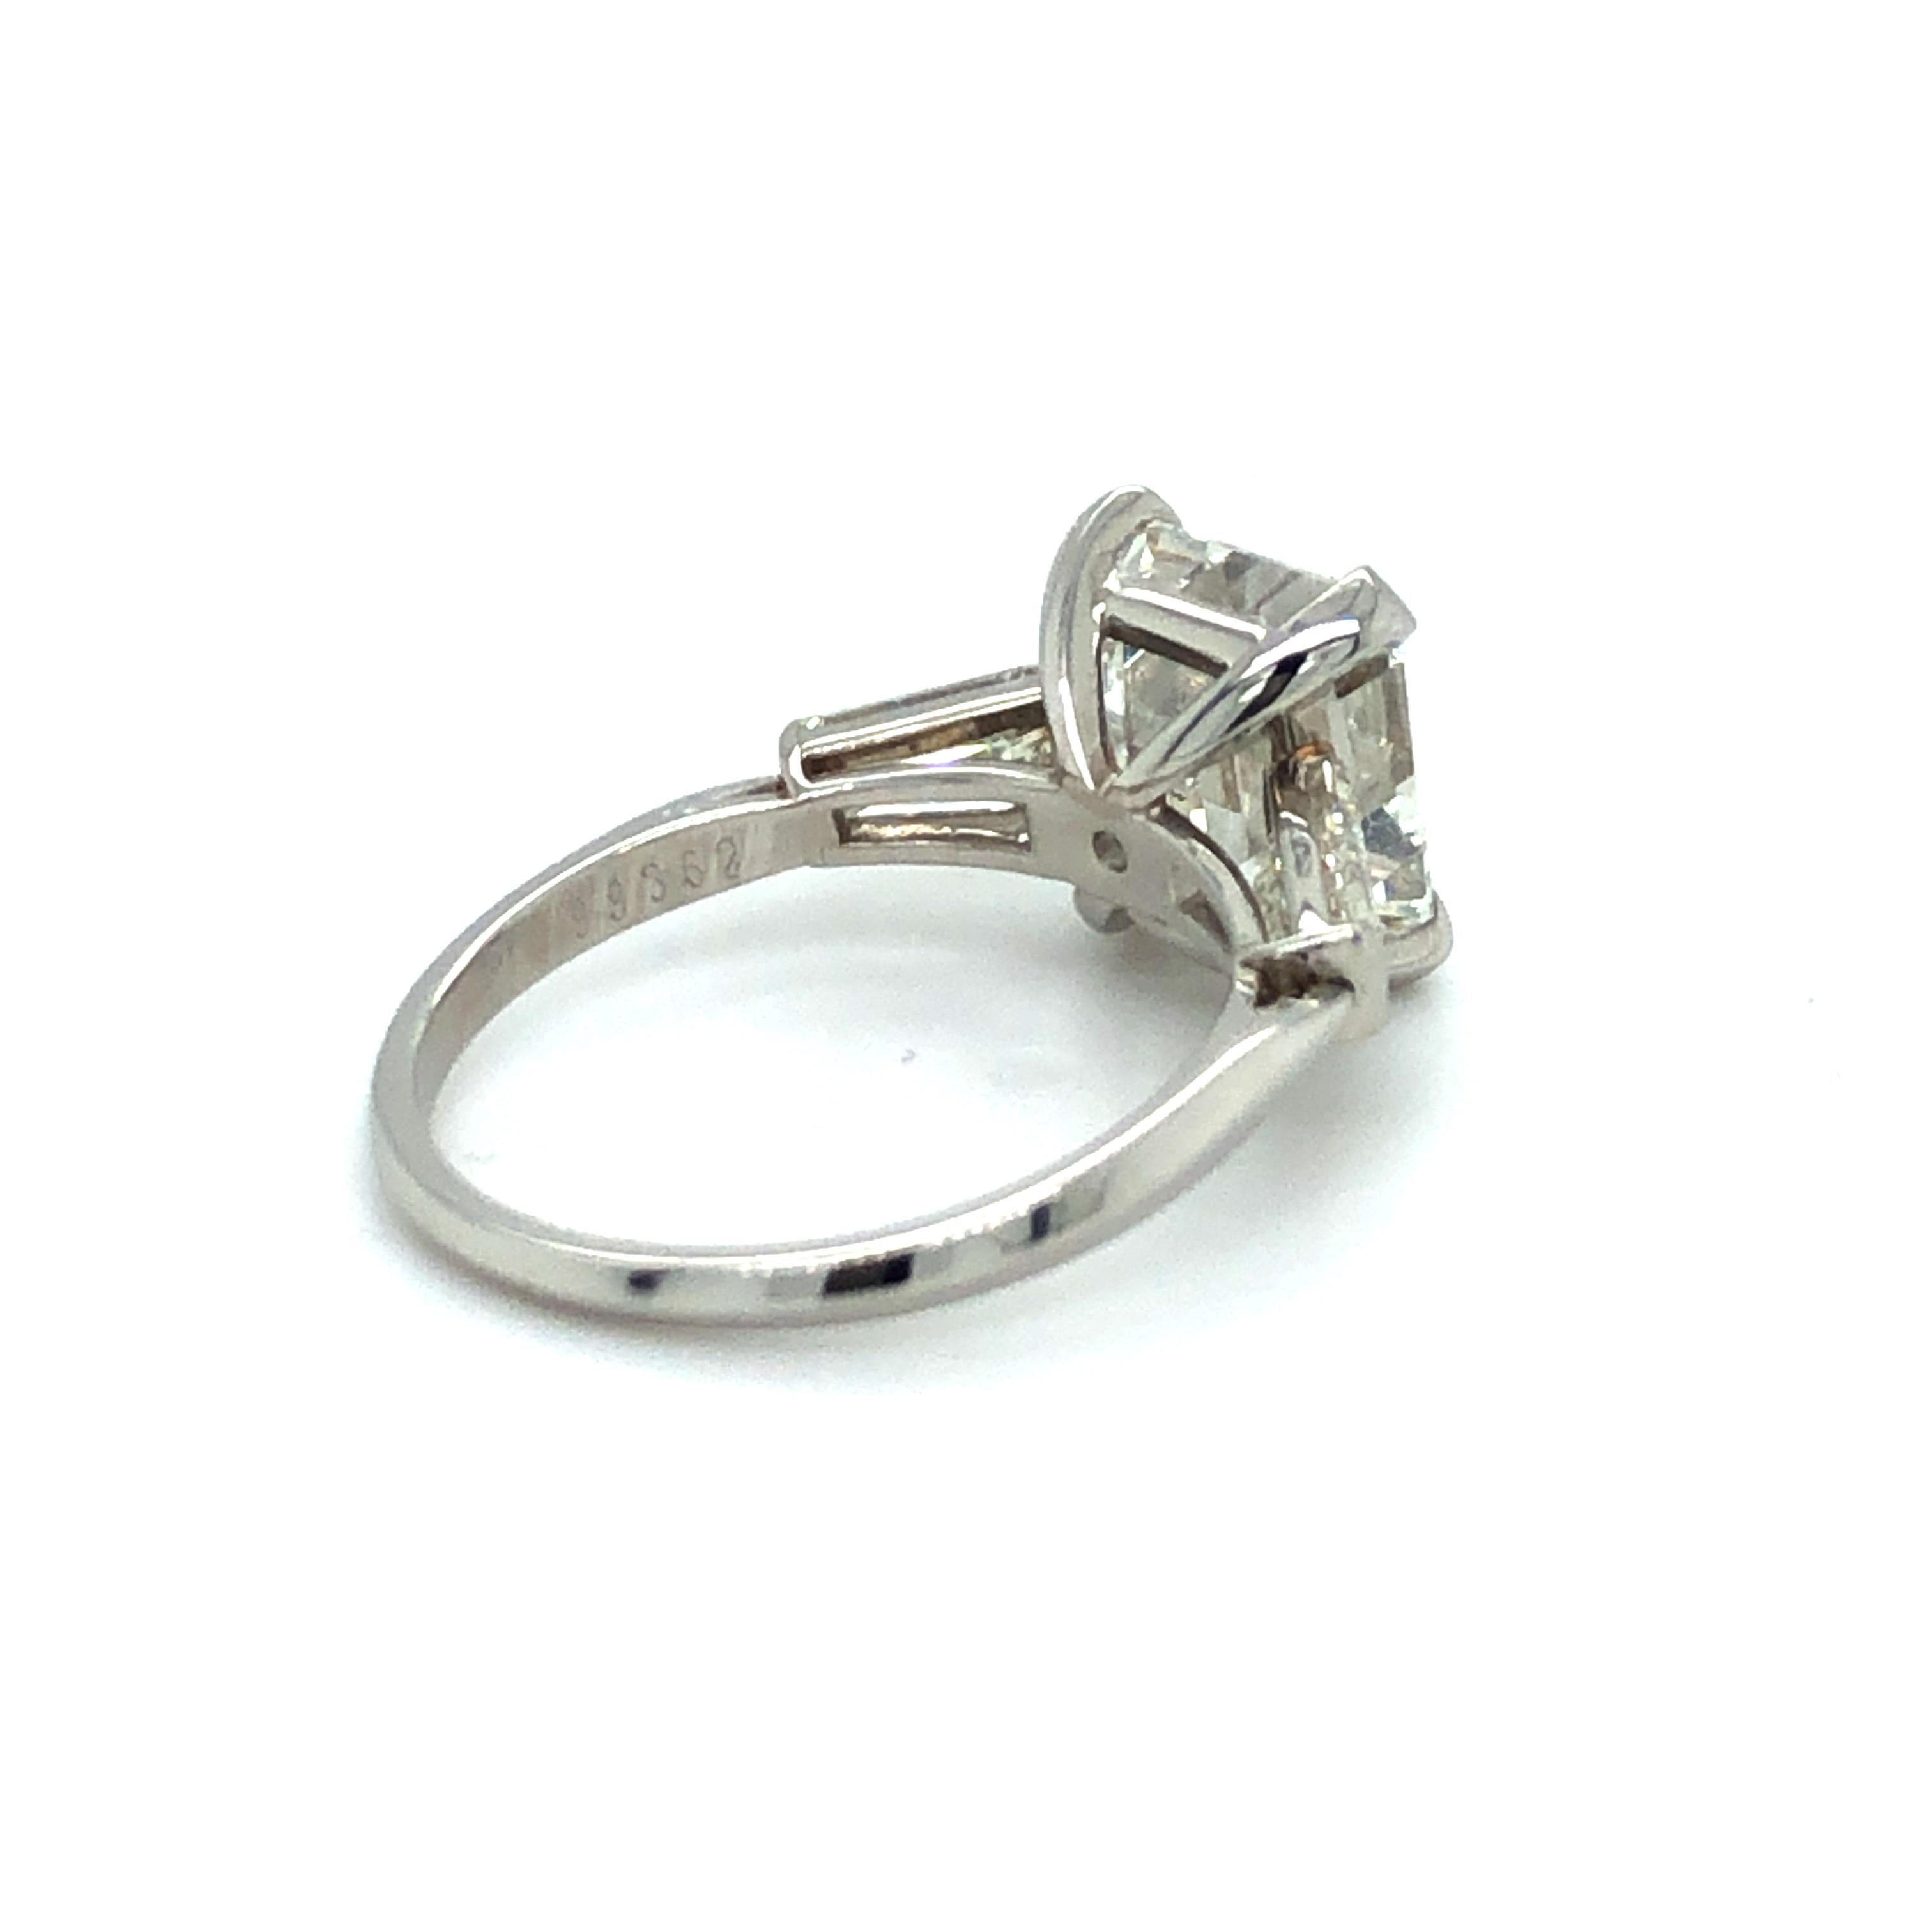 GIA Certified 4.19 Carat Emerald Cut Diamond Ring in Platinum 950 6